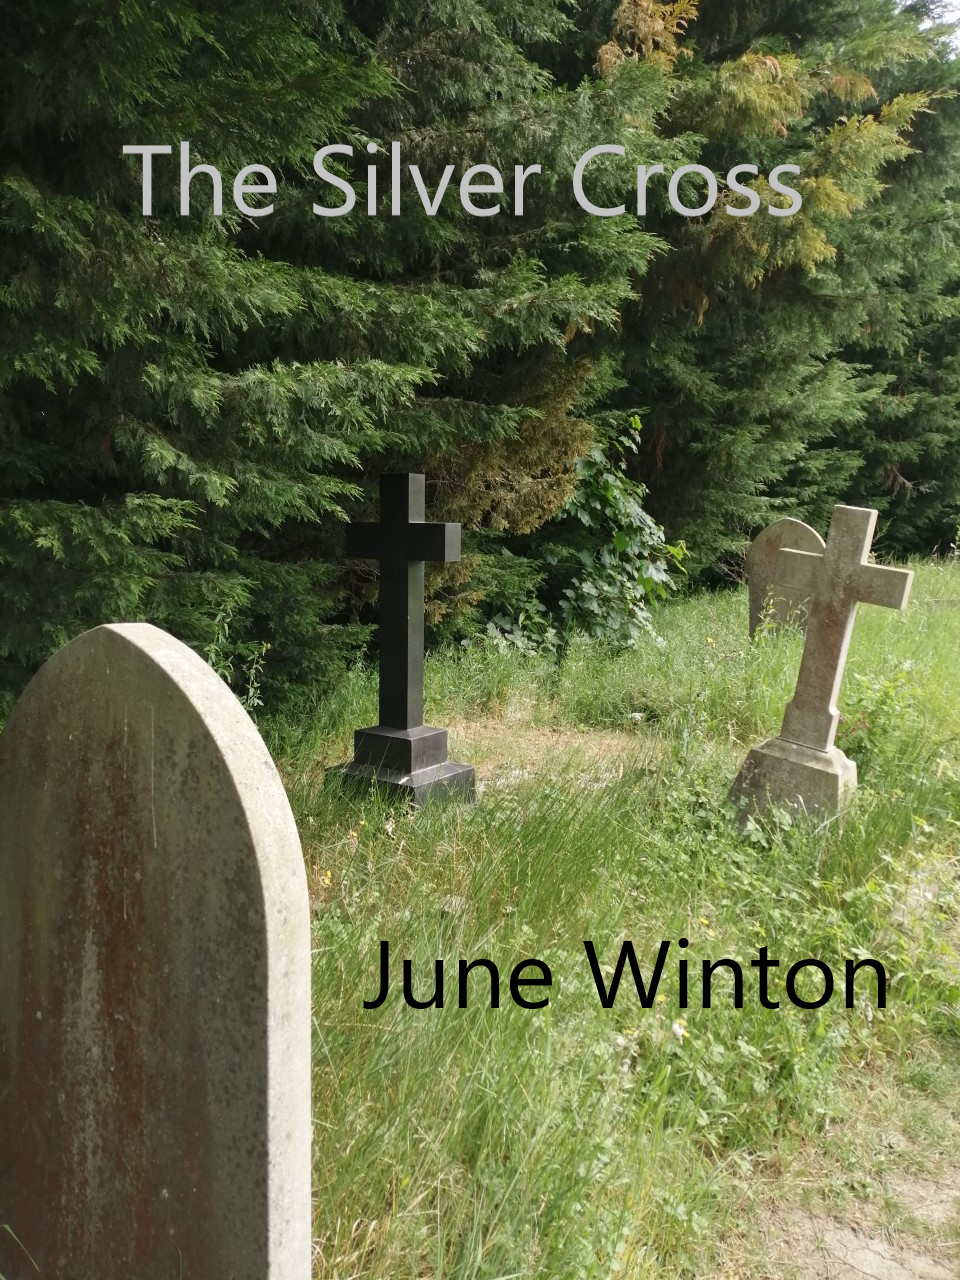 FREE: The Silver Cross by June Winton